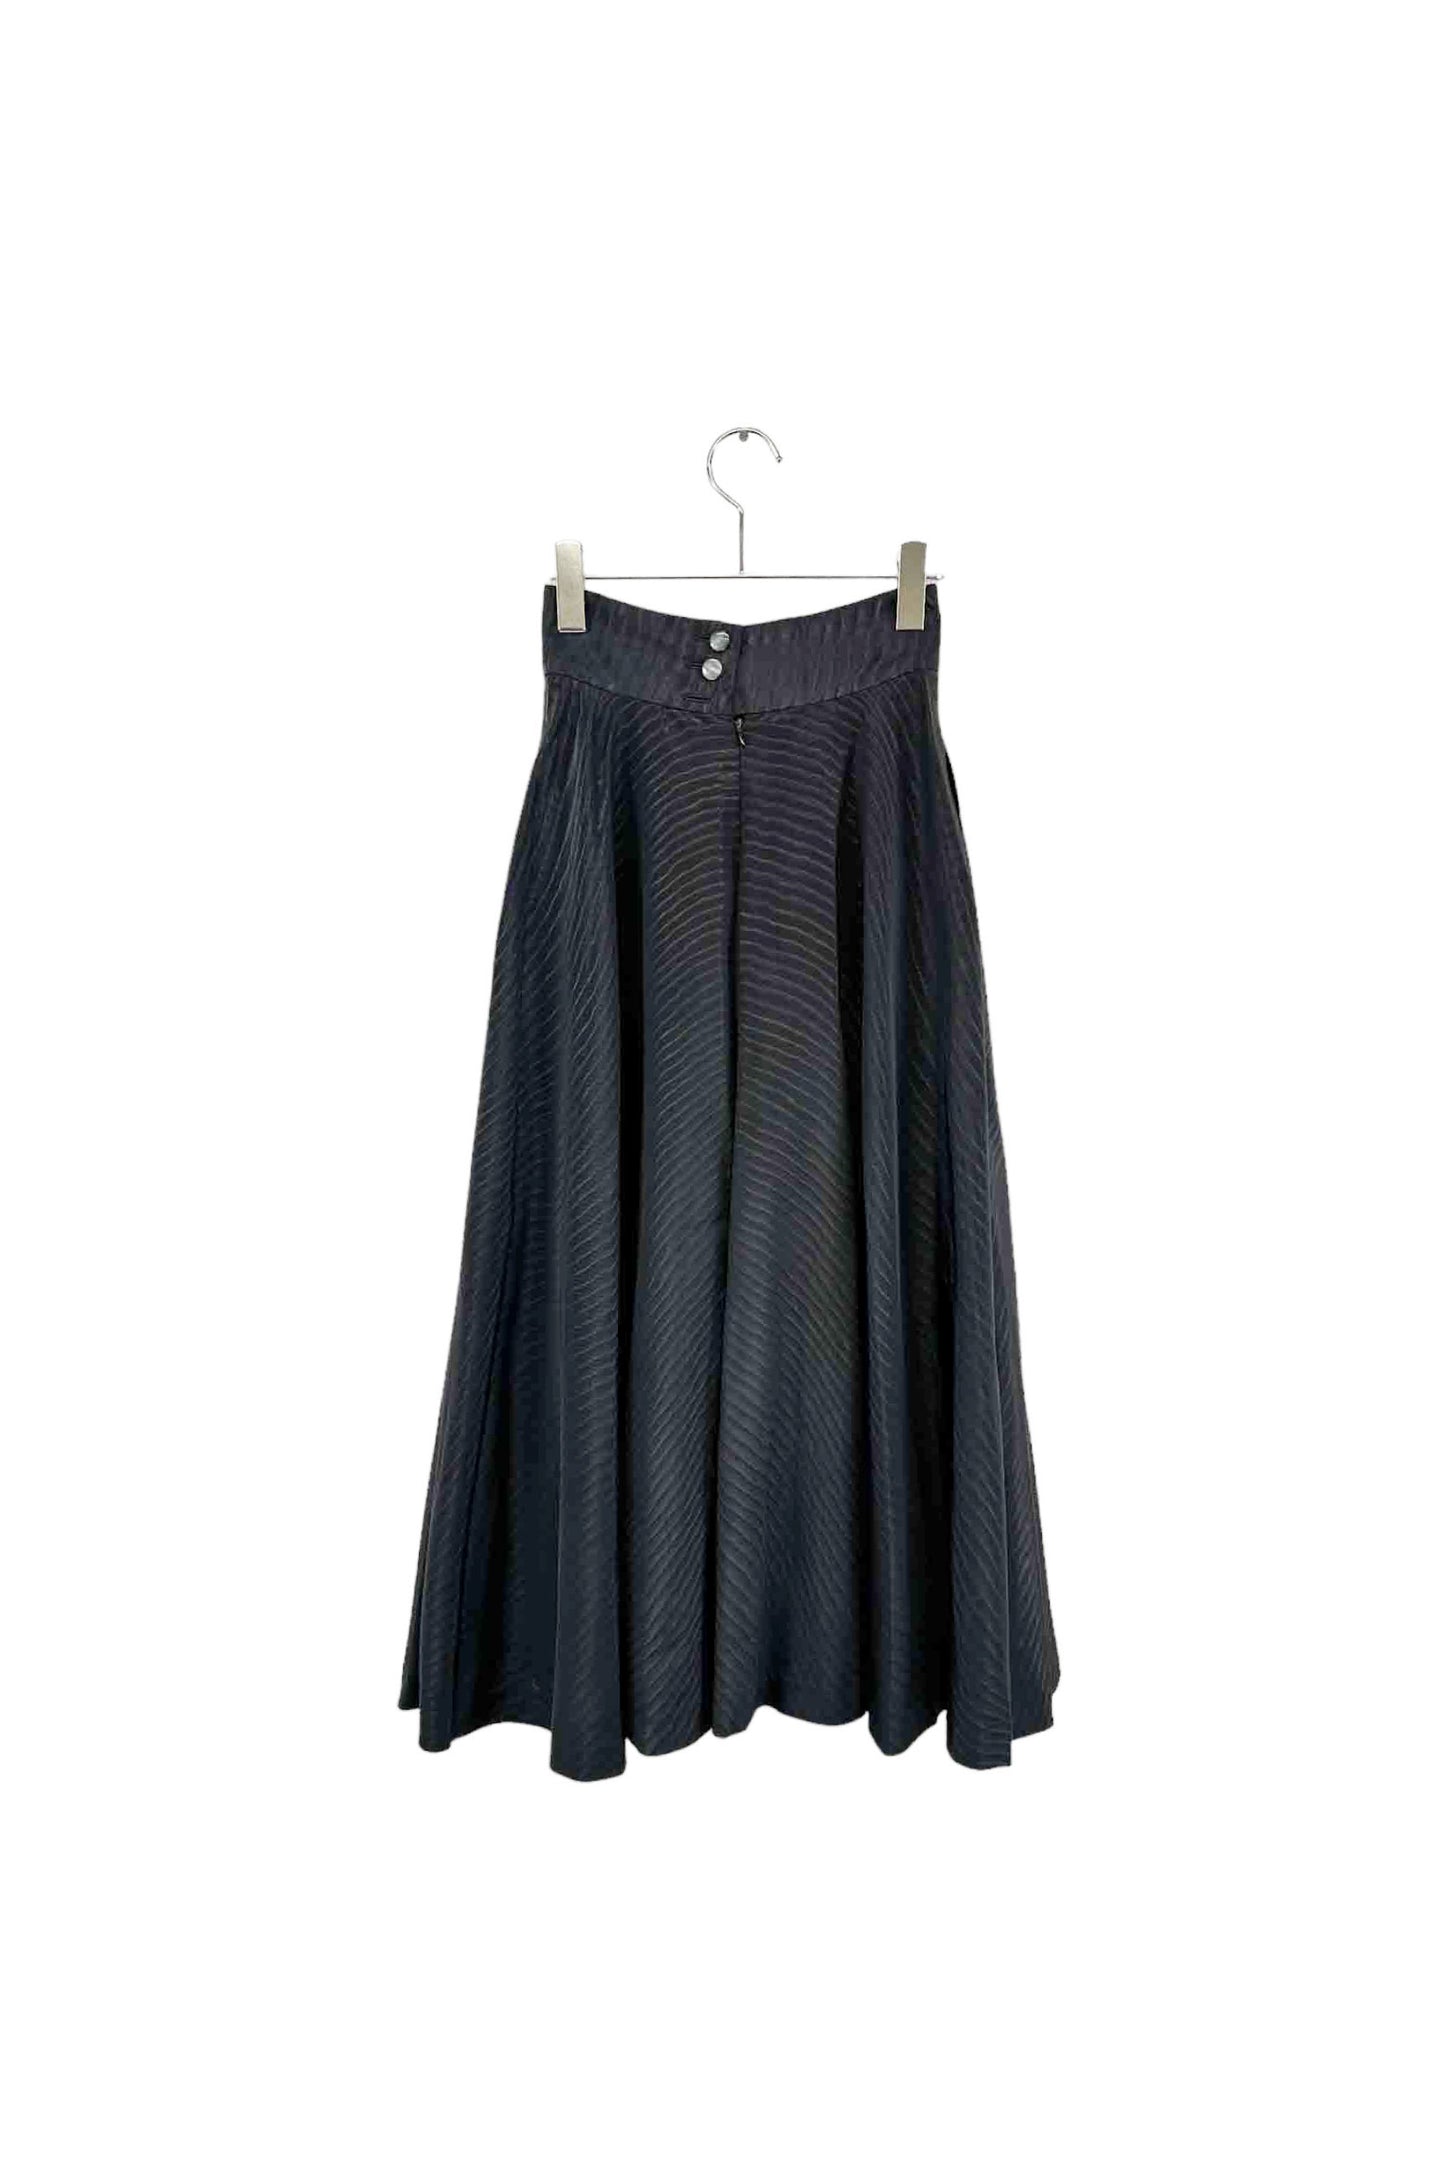 ATELIER SAB black skirt